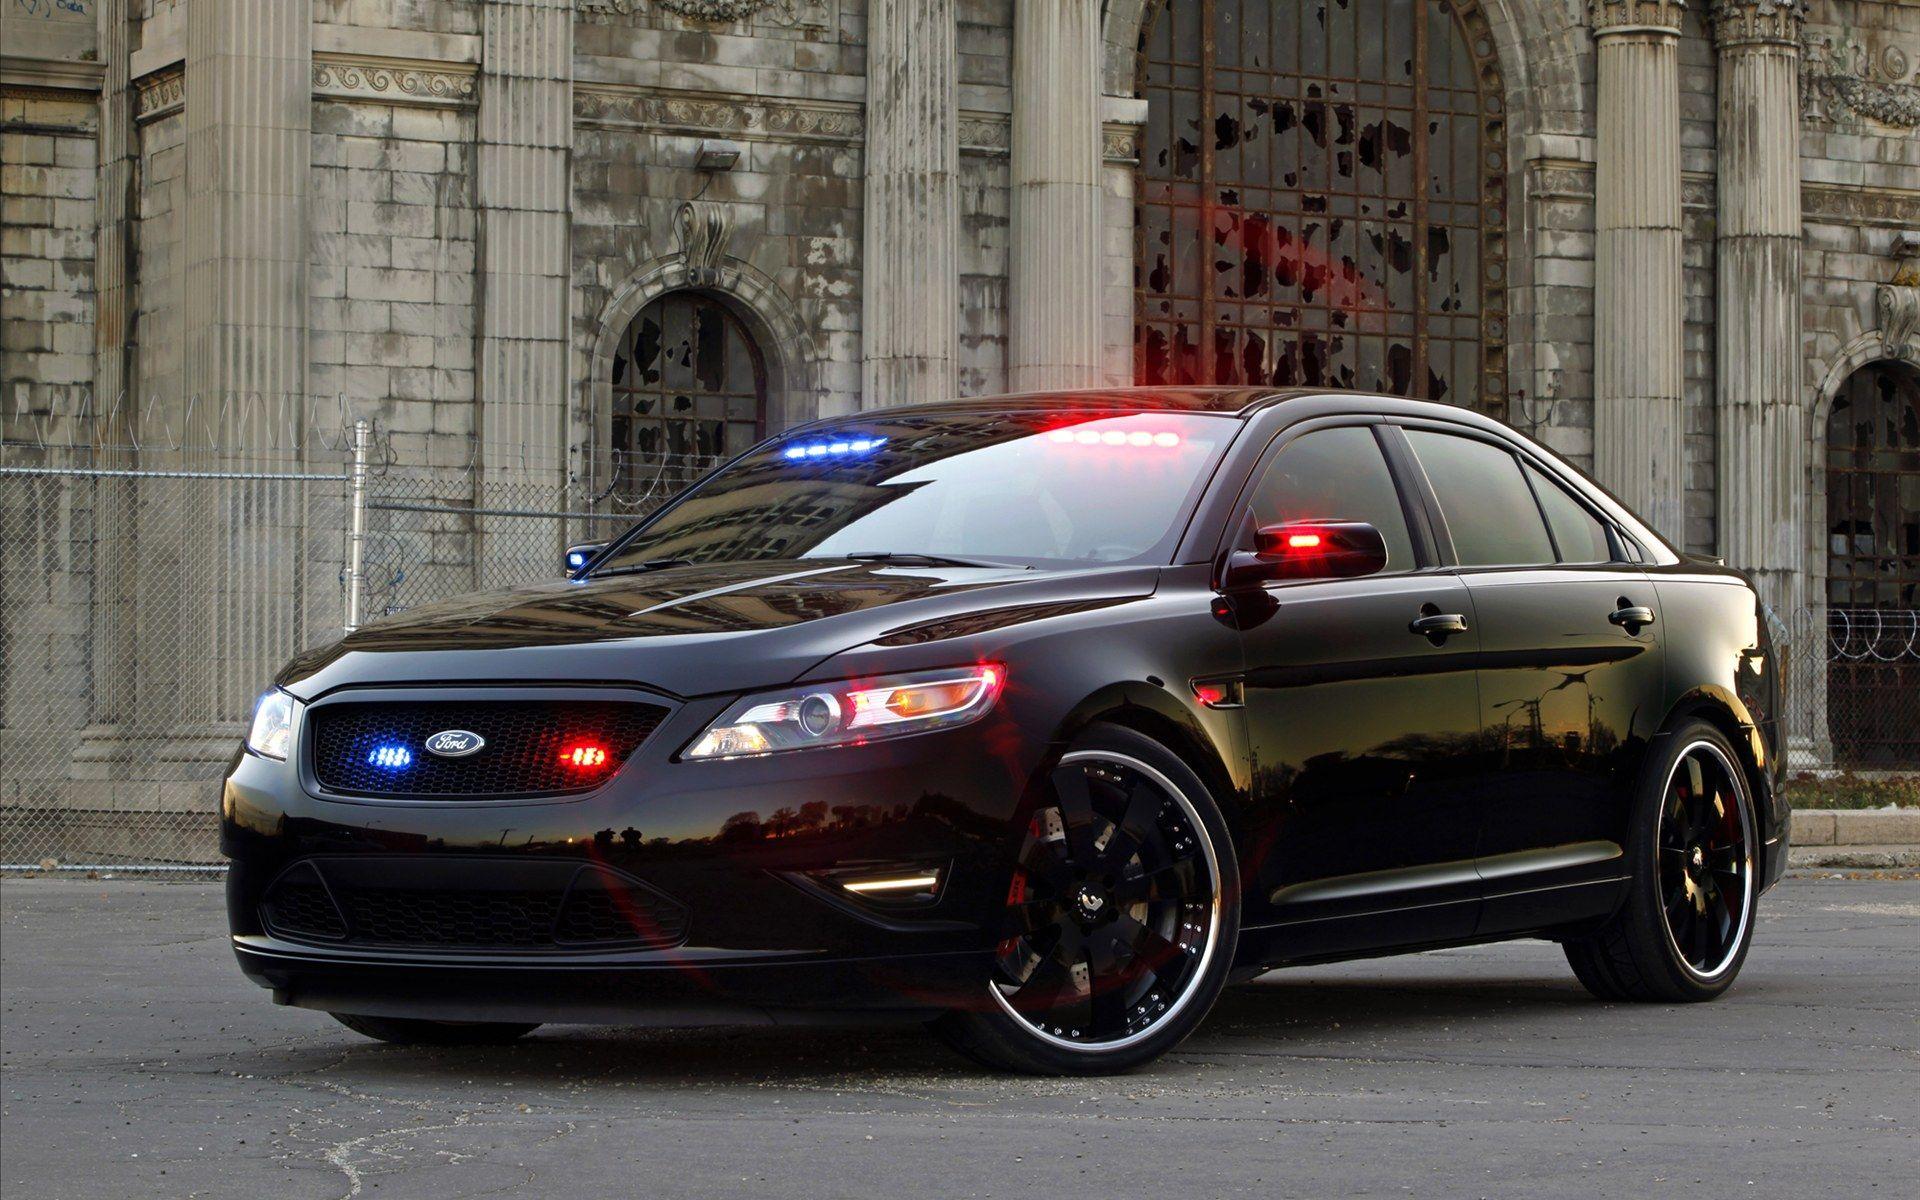 Ford Stealth Police Interceptor Concept Wallpaper. HD Car